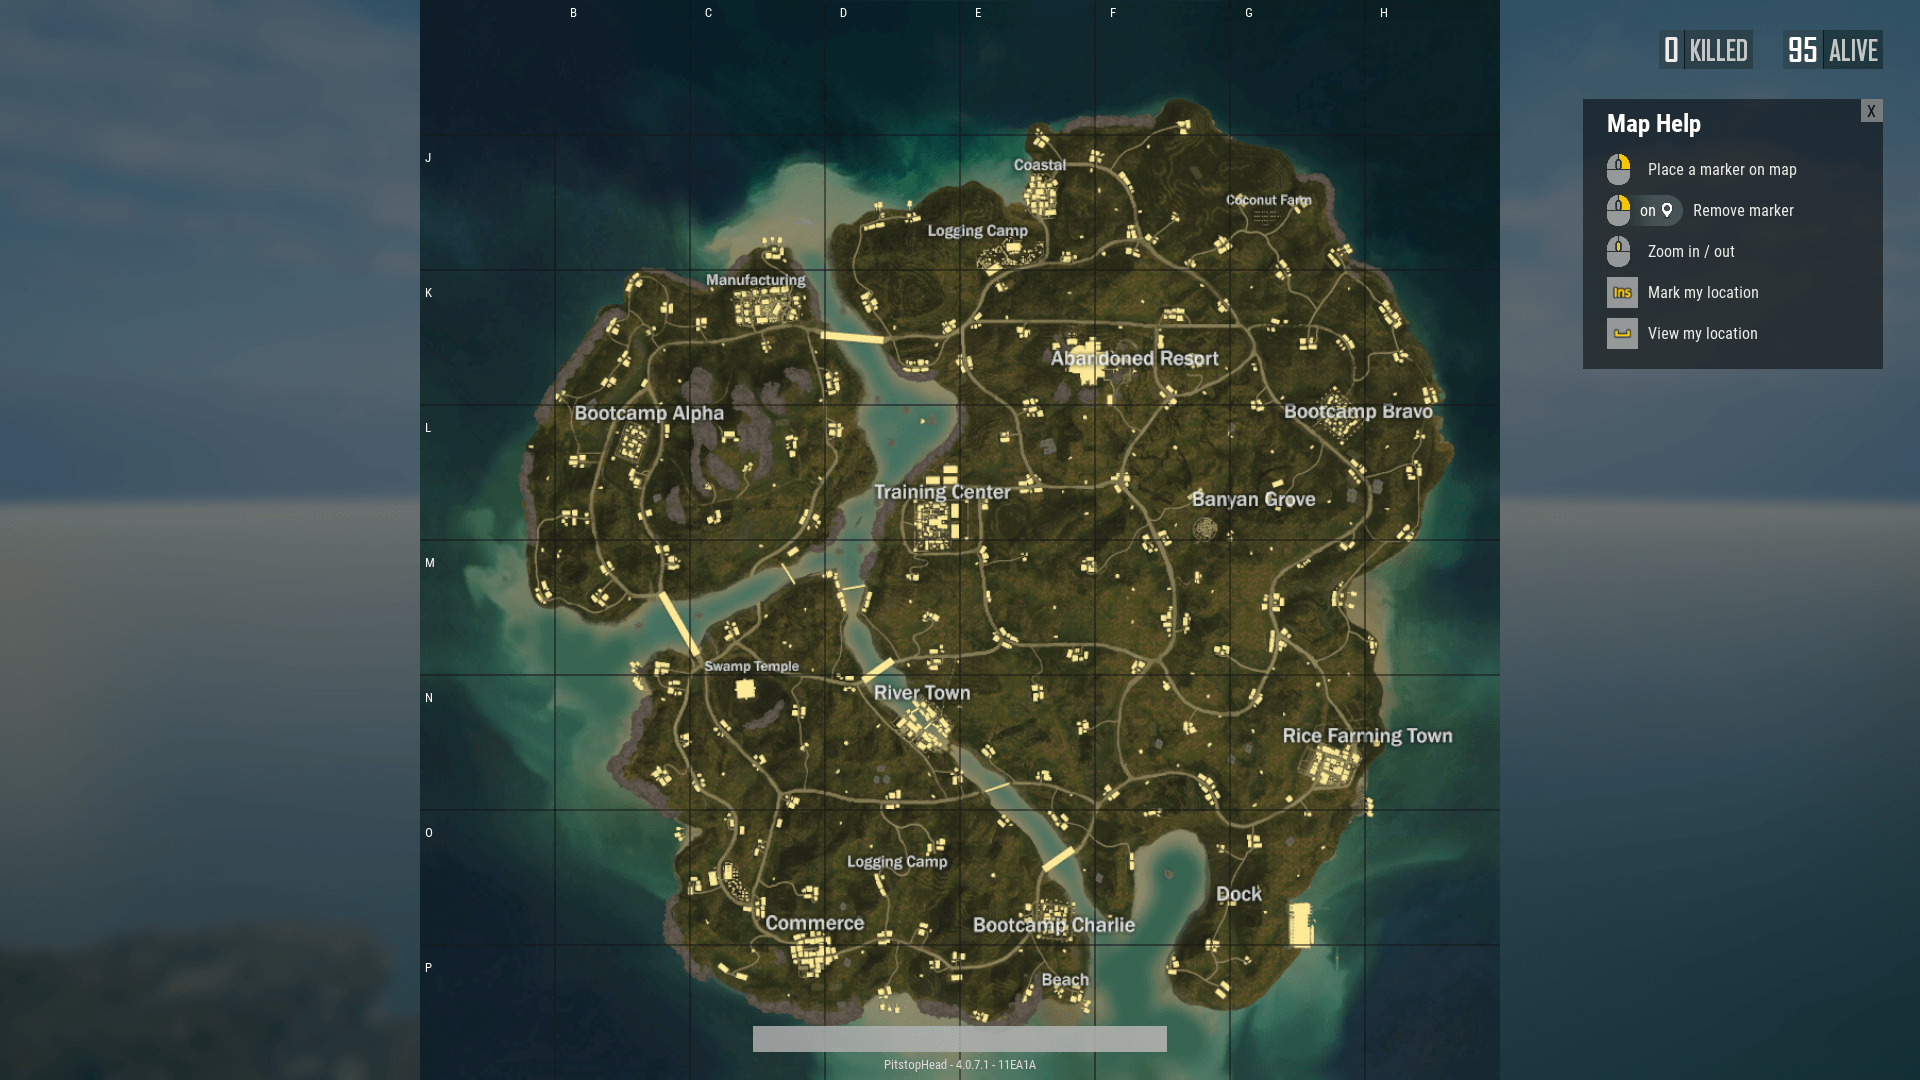 The new SAVAGE island PUBG Map